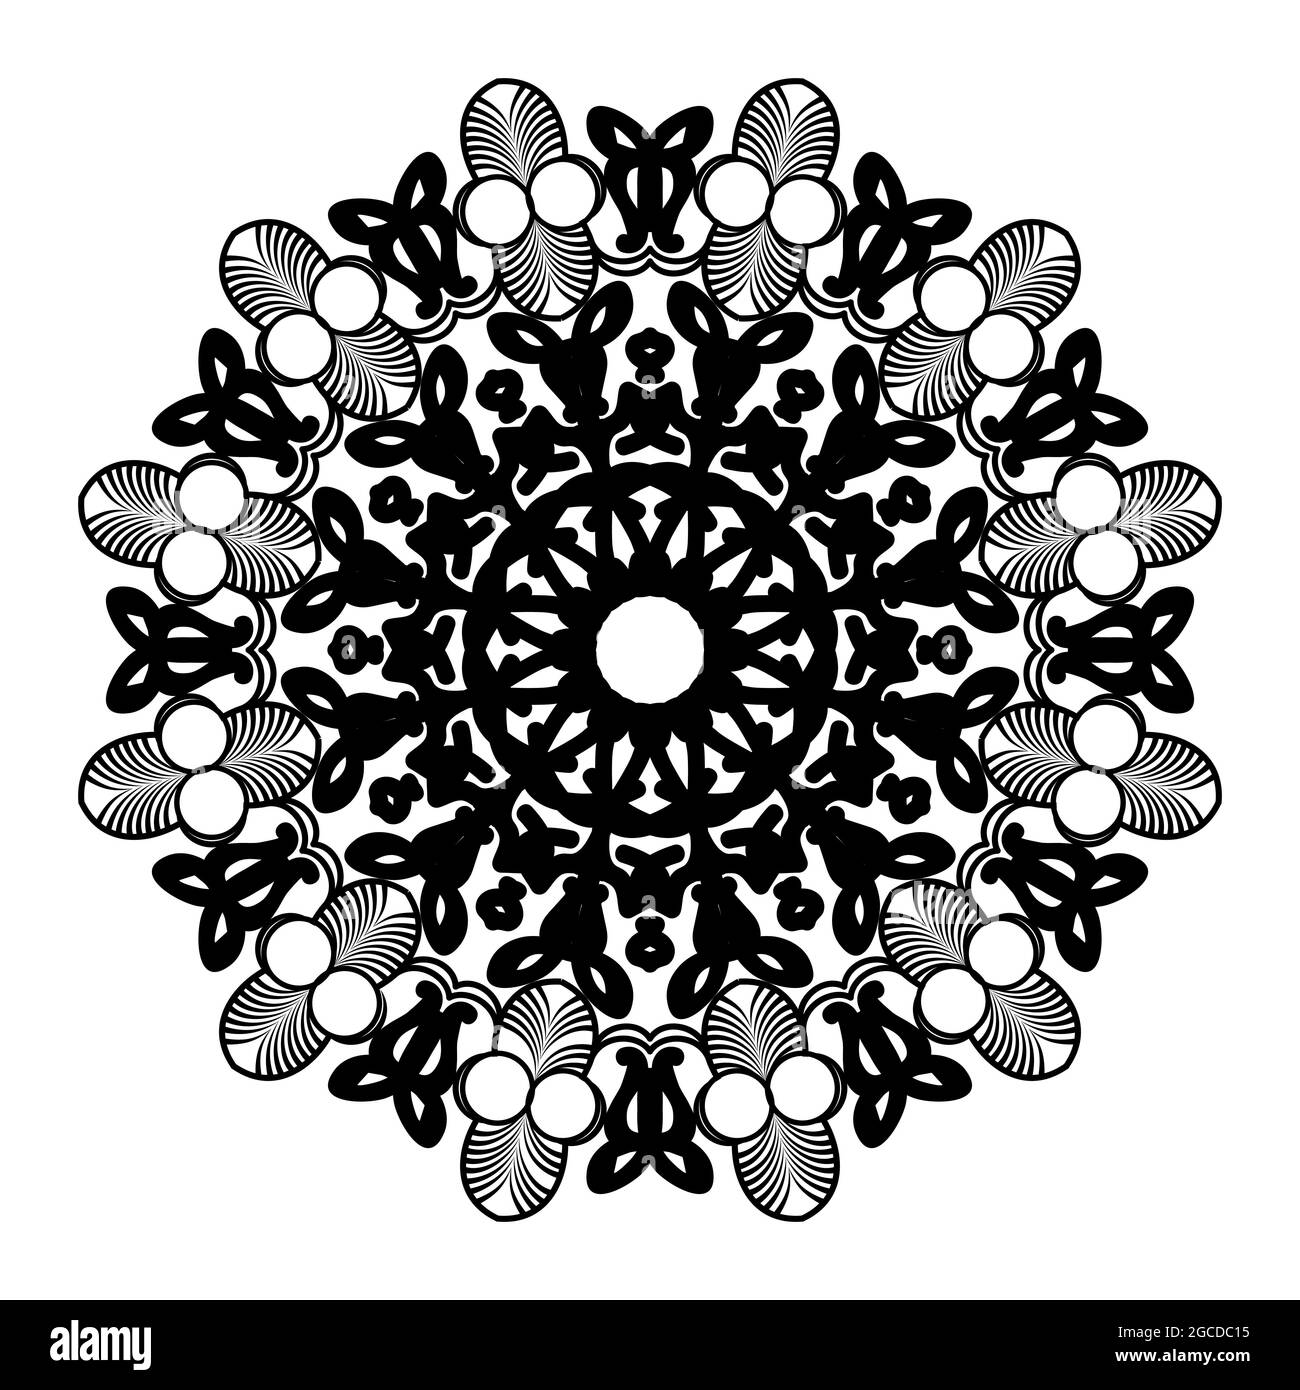 https://c8.alamy.com/comp/2GCDC15/islamic-mandala-design-background-of-flower-pattern-vector-art-element-2GCDC15.jpg